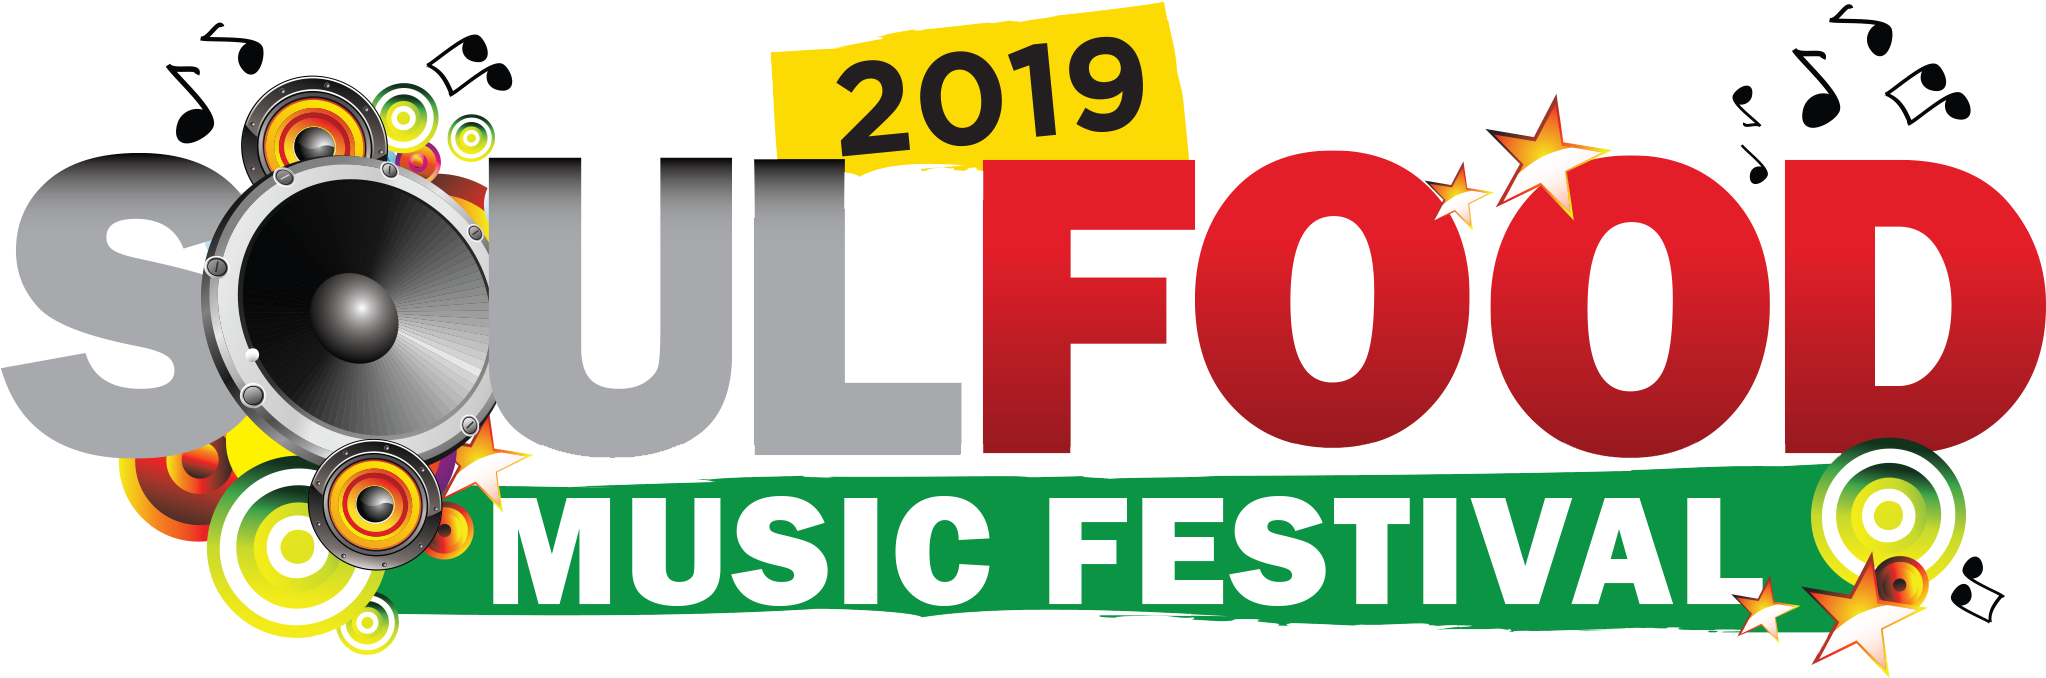 2019 Soul Food Music Festival Logo PNG